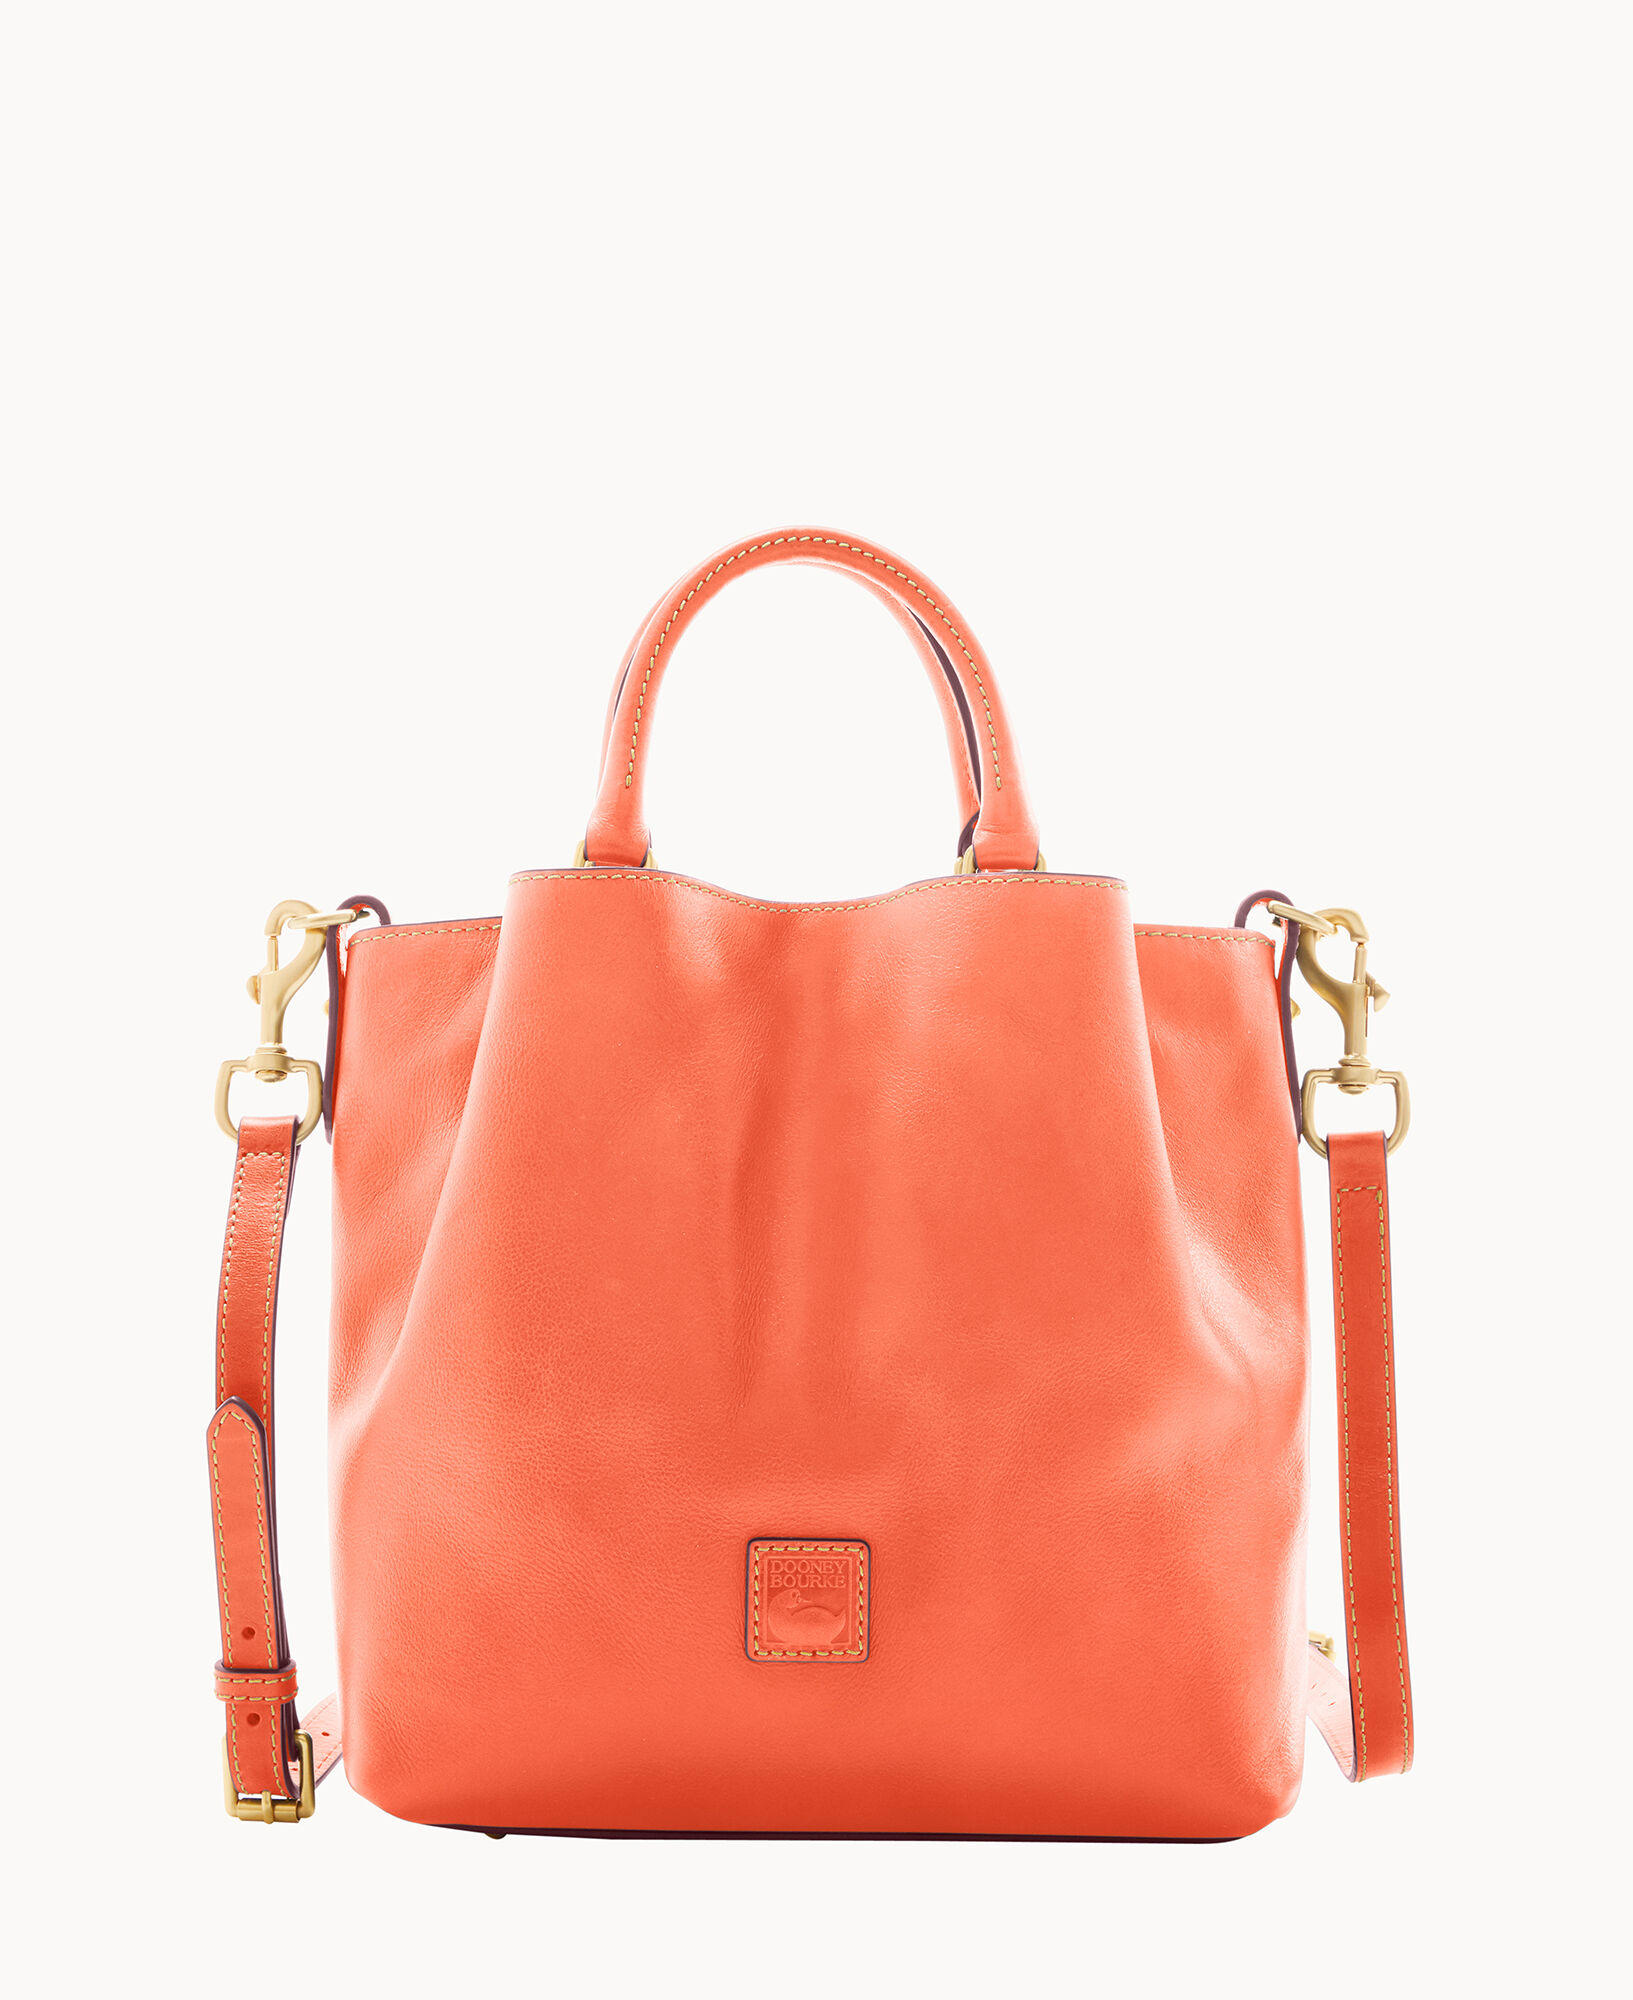 Deux Lux Handbag Soft Tote Bag in Ecru with Neon Orange Handle